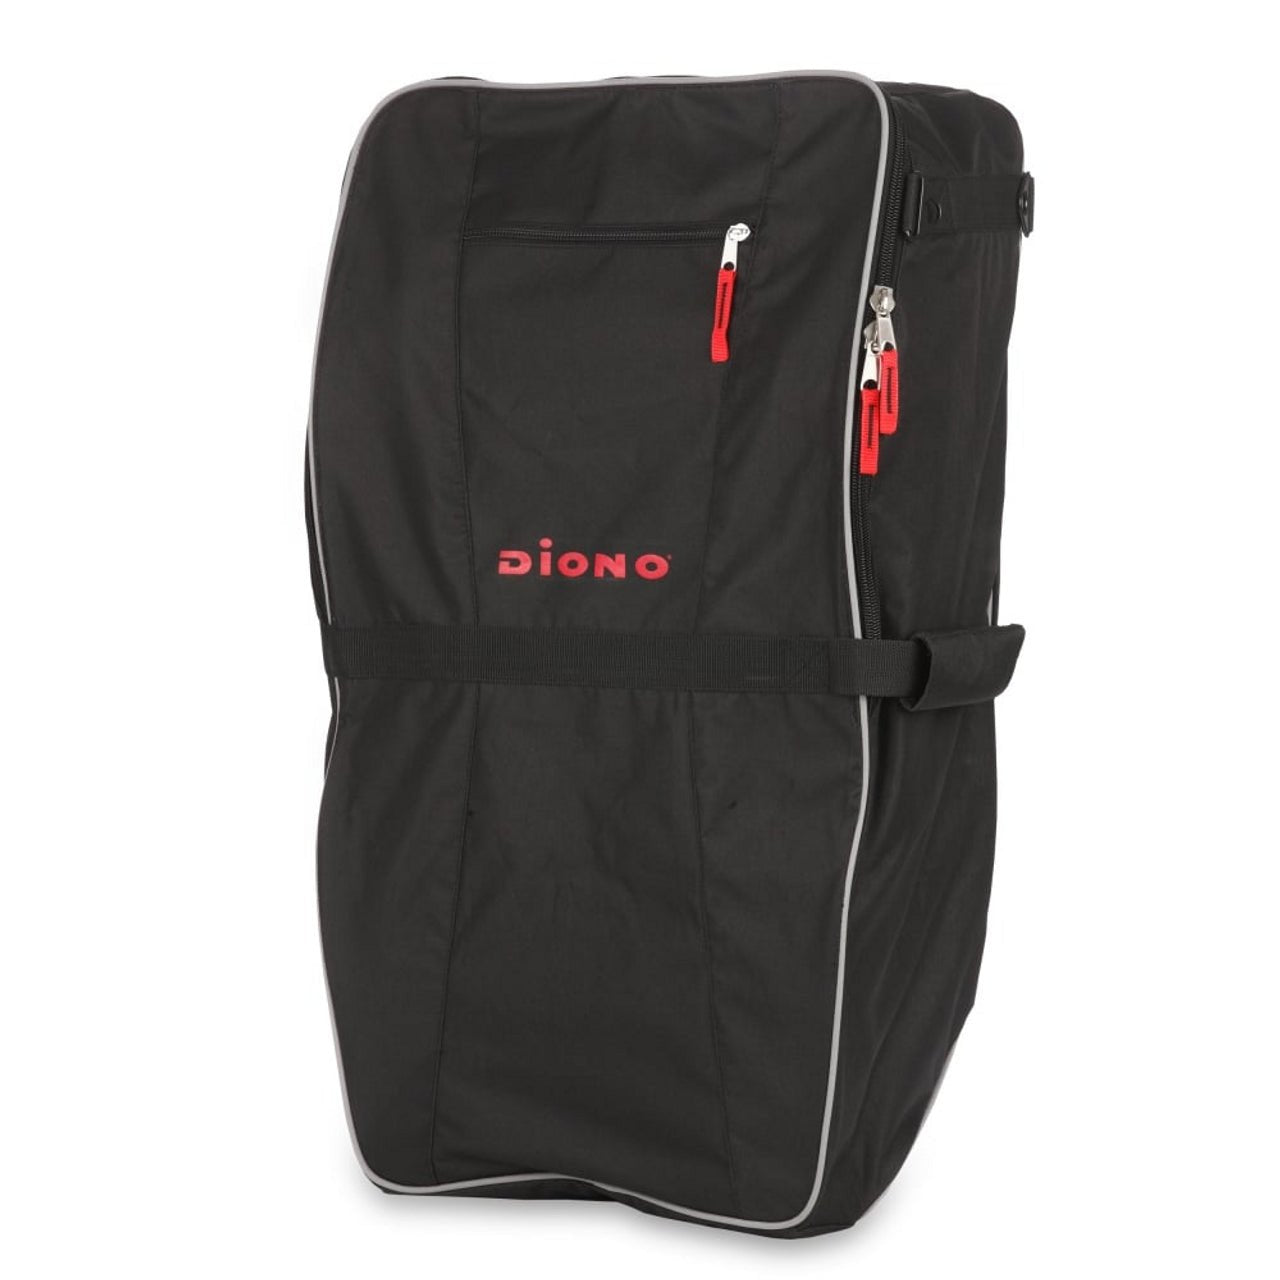 Diono Radian Car Seat Travel Bag - ANB Baby -$20 - $50